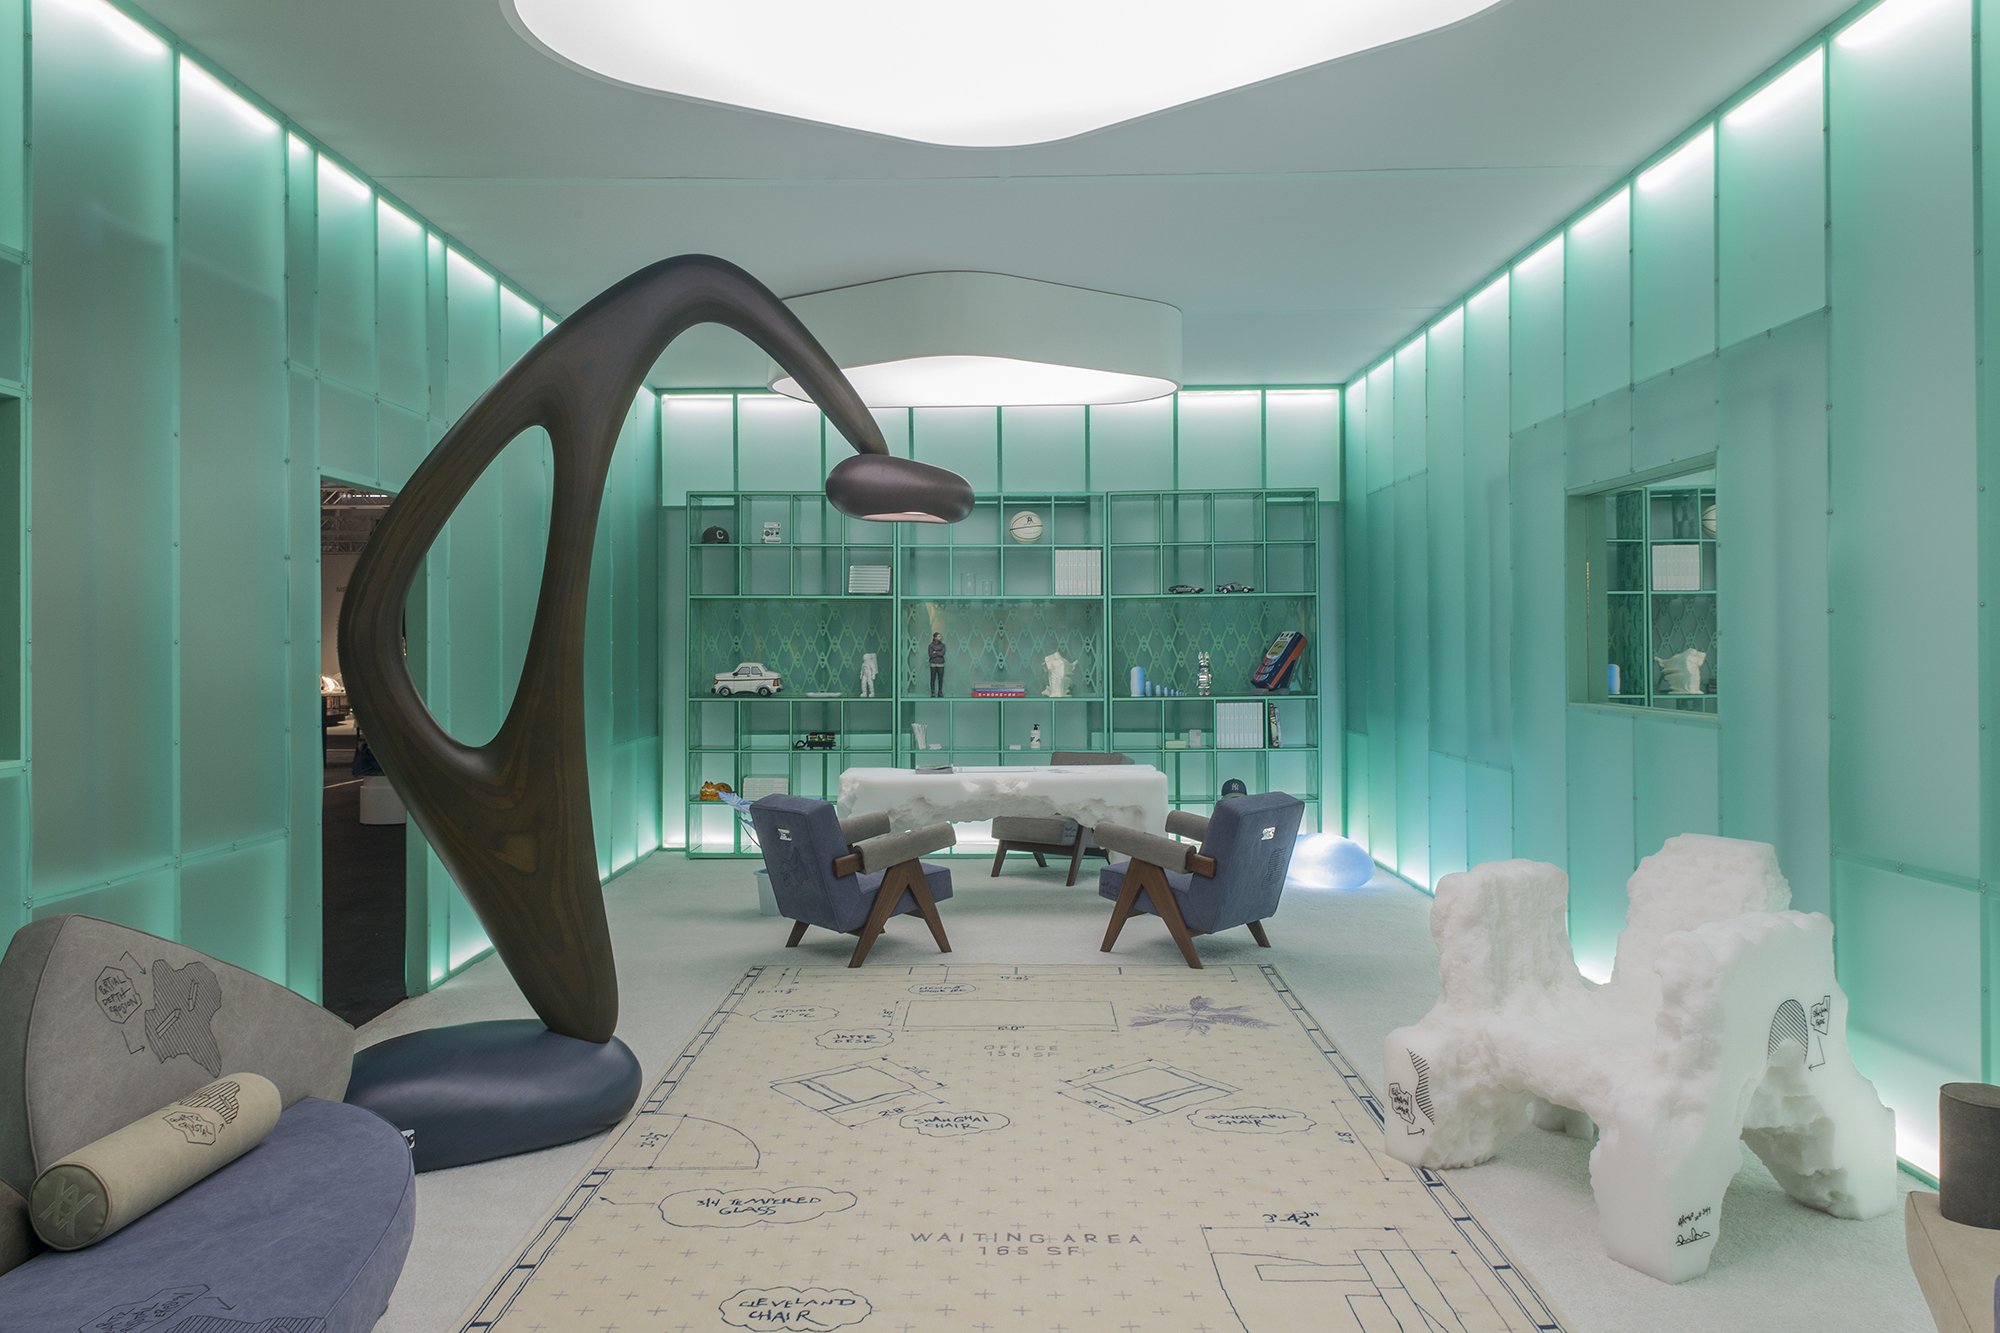 Design Miami 2019, Friedman Benda booth